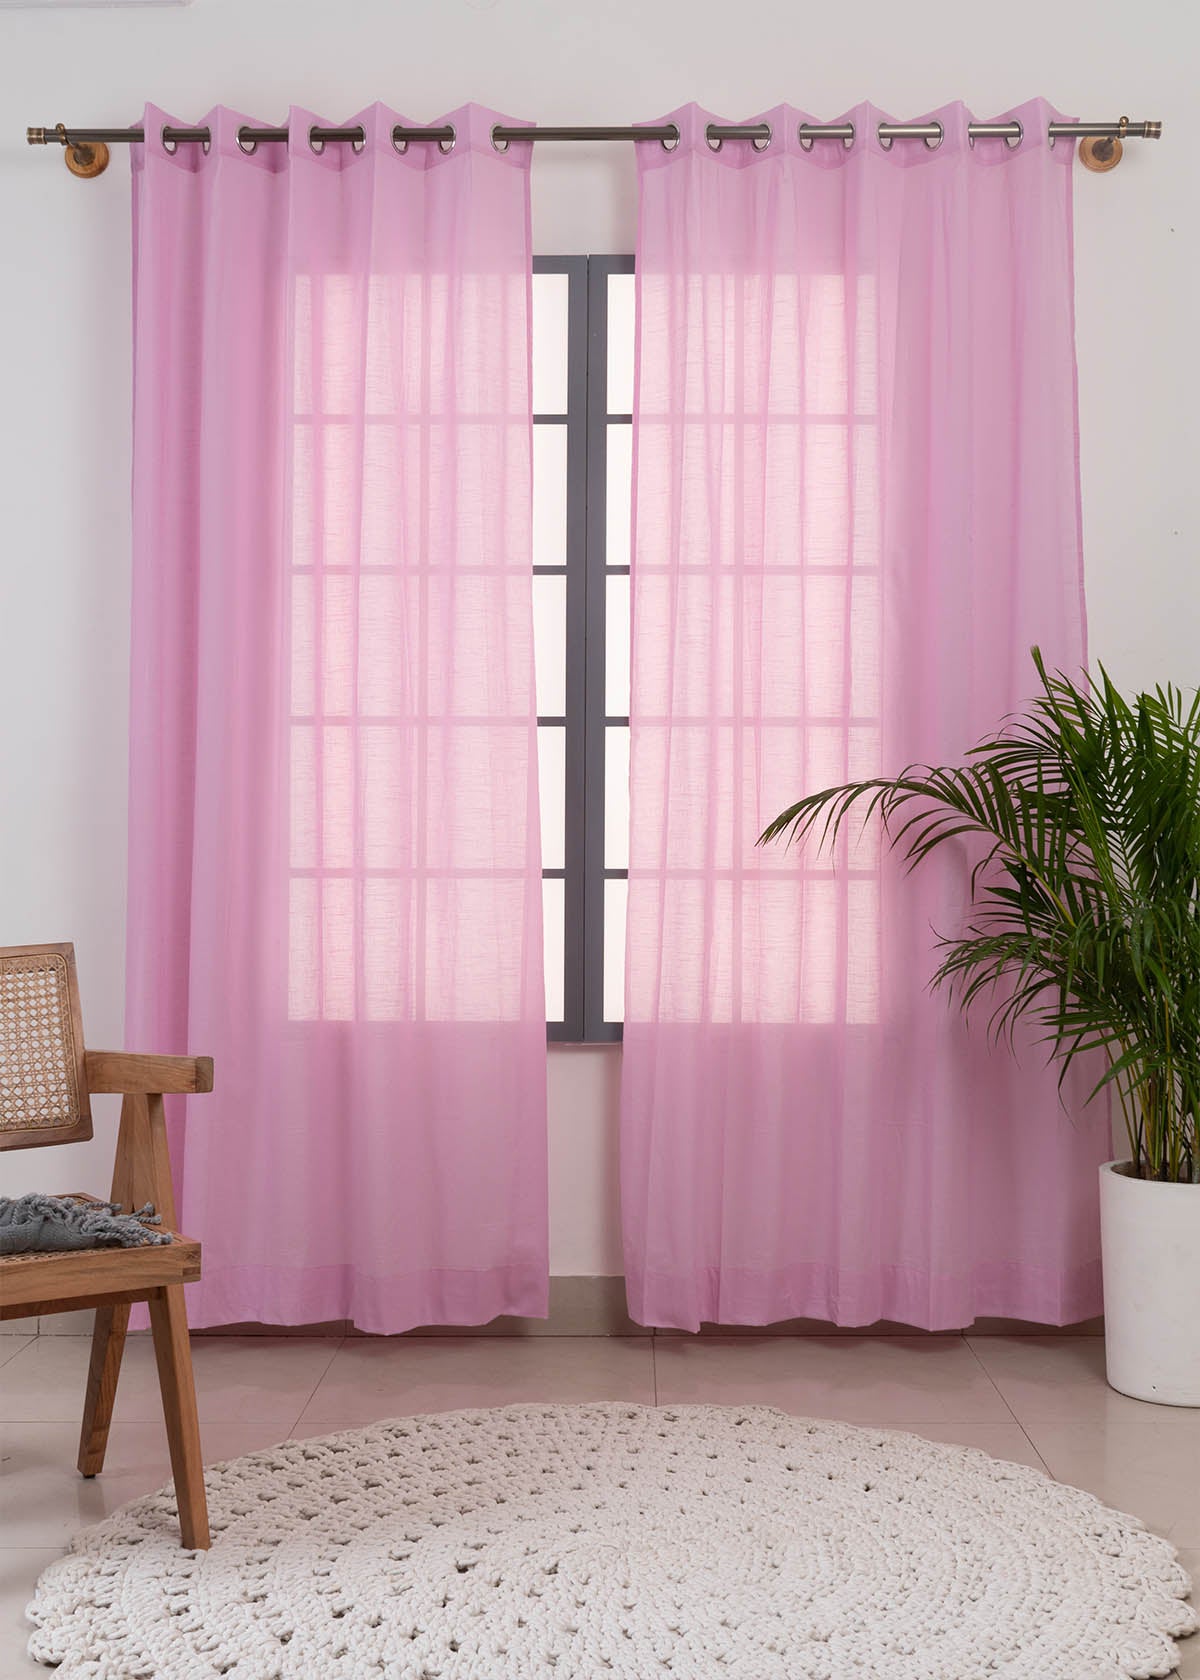 Solid Lavender sheer 100% cotton plain curtain for Living room & bedroom - Light filtering - Pack of 1